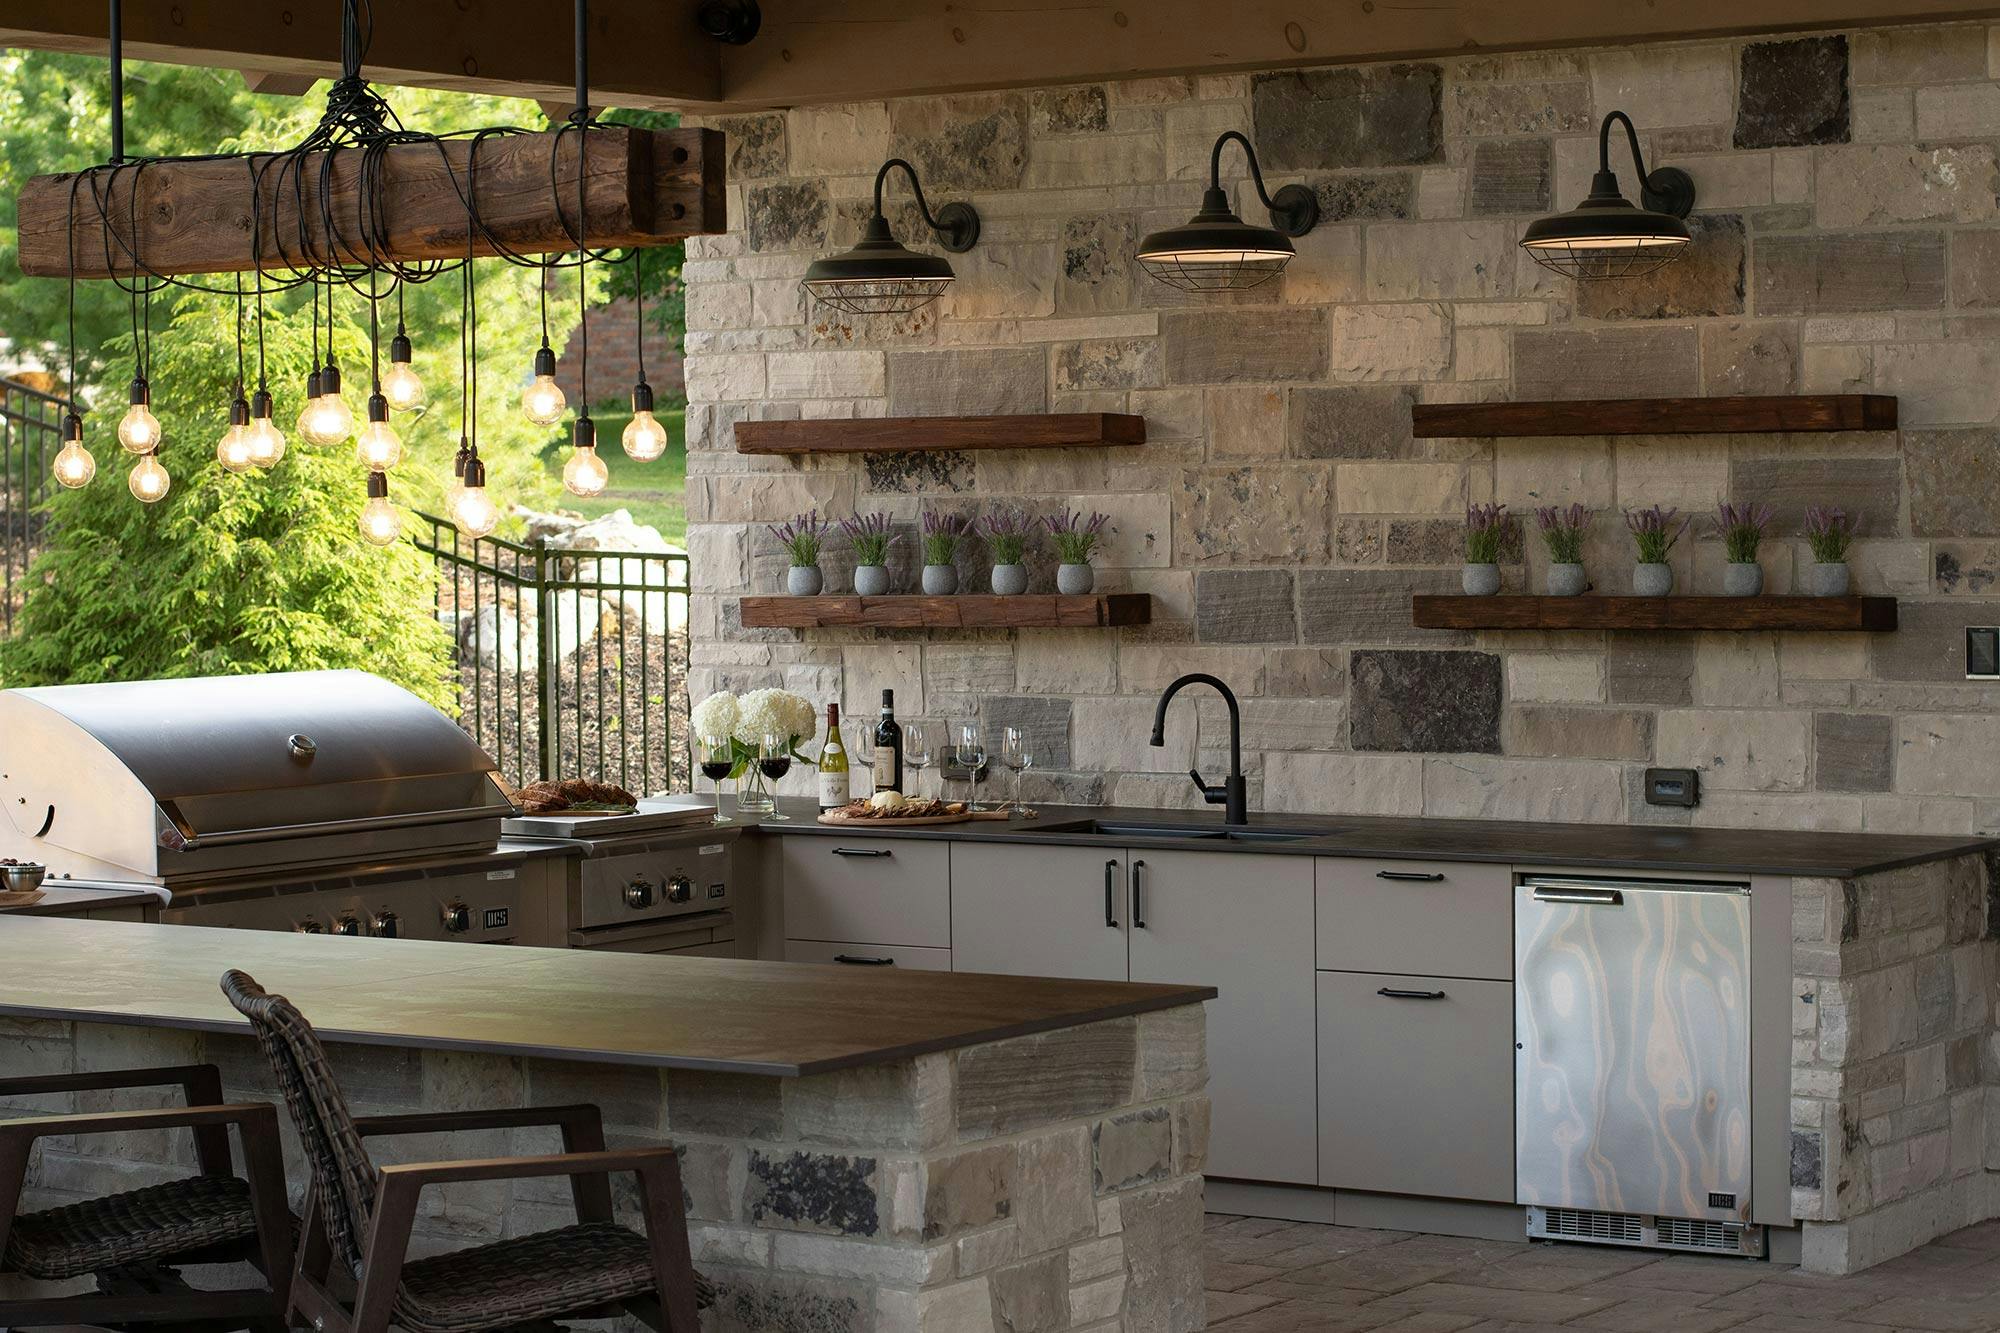 Build an Outdoor Kitchen Cabinet Part 1 